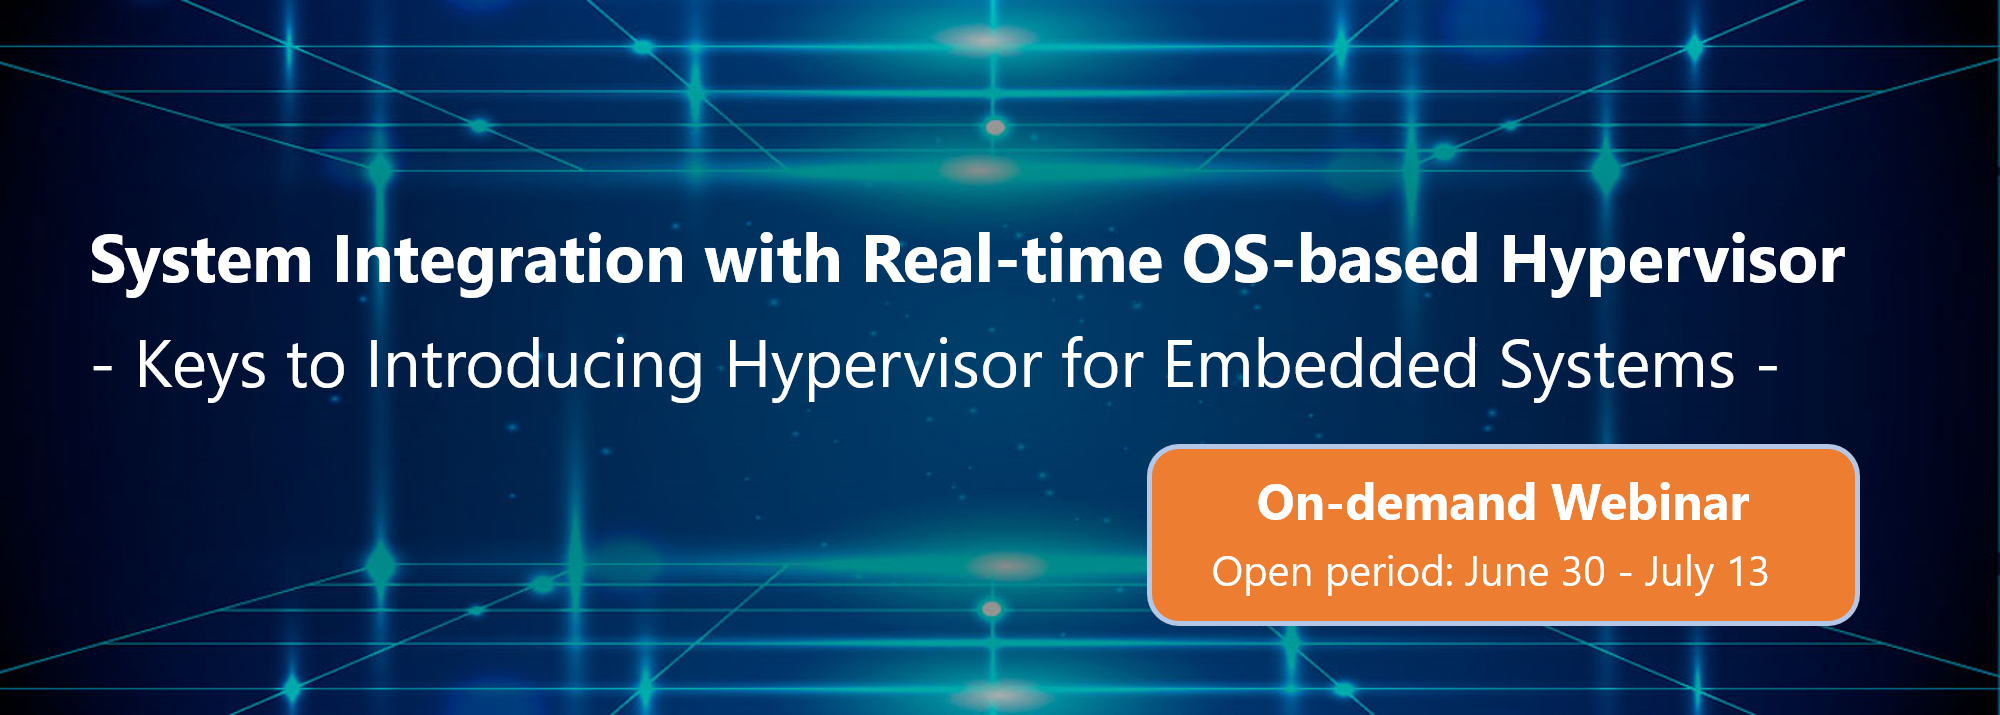 [Webinar] System Integration with Real-time OS-based Hypervisor